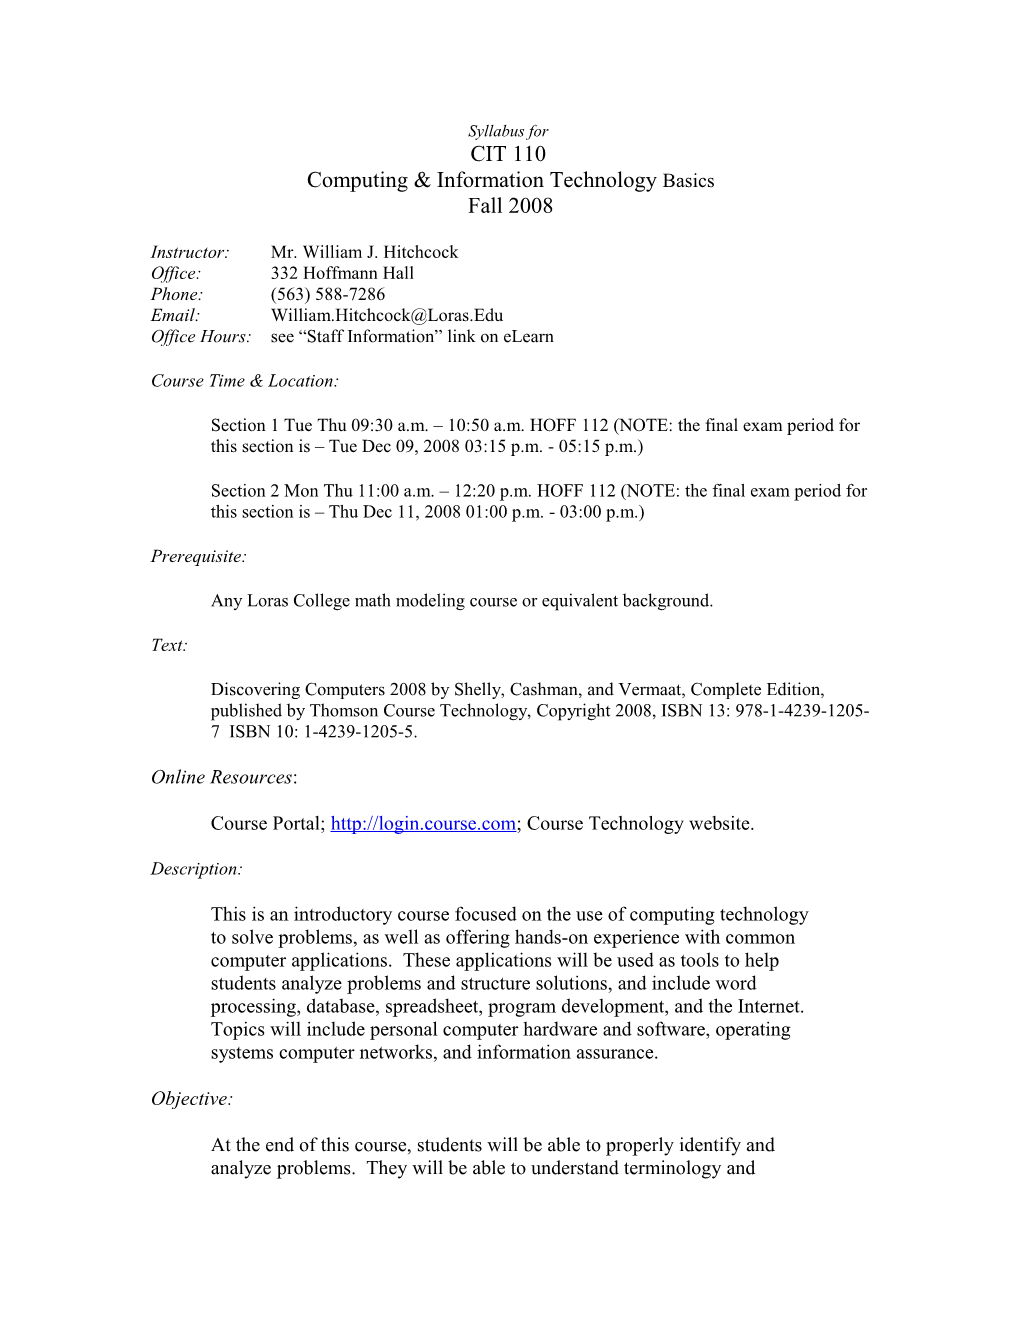 Syllabus for CIT 110 Computing & Information Technology Basics Fall 2008